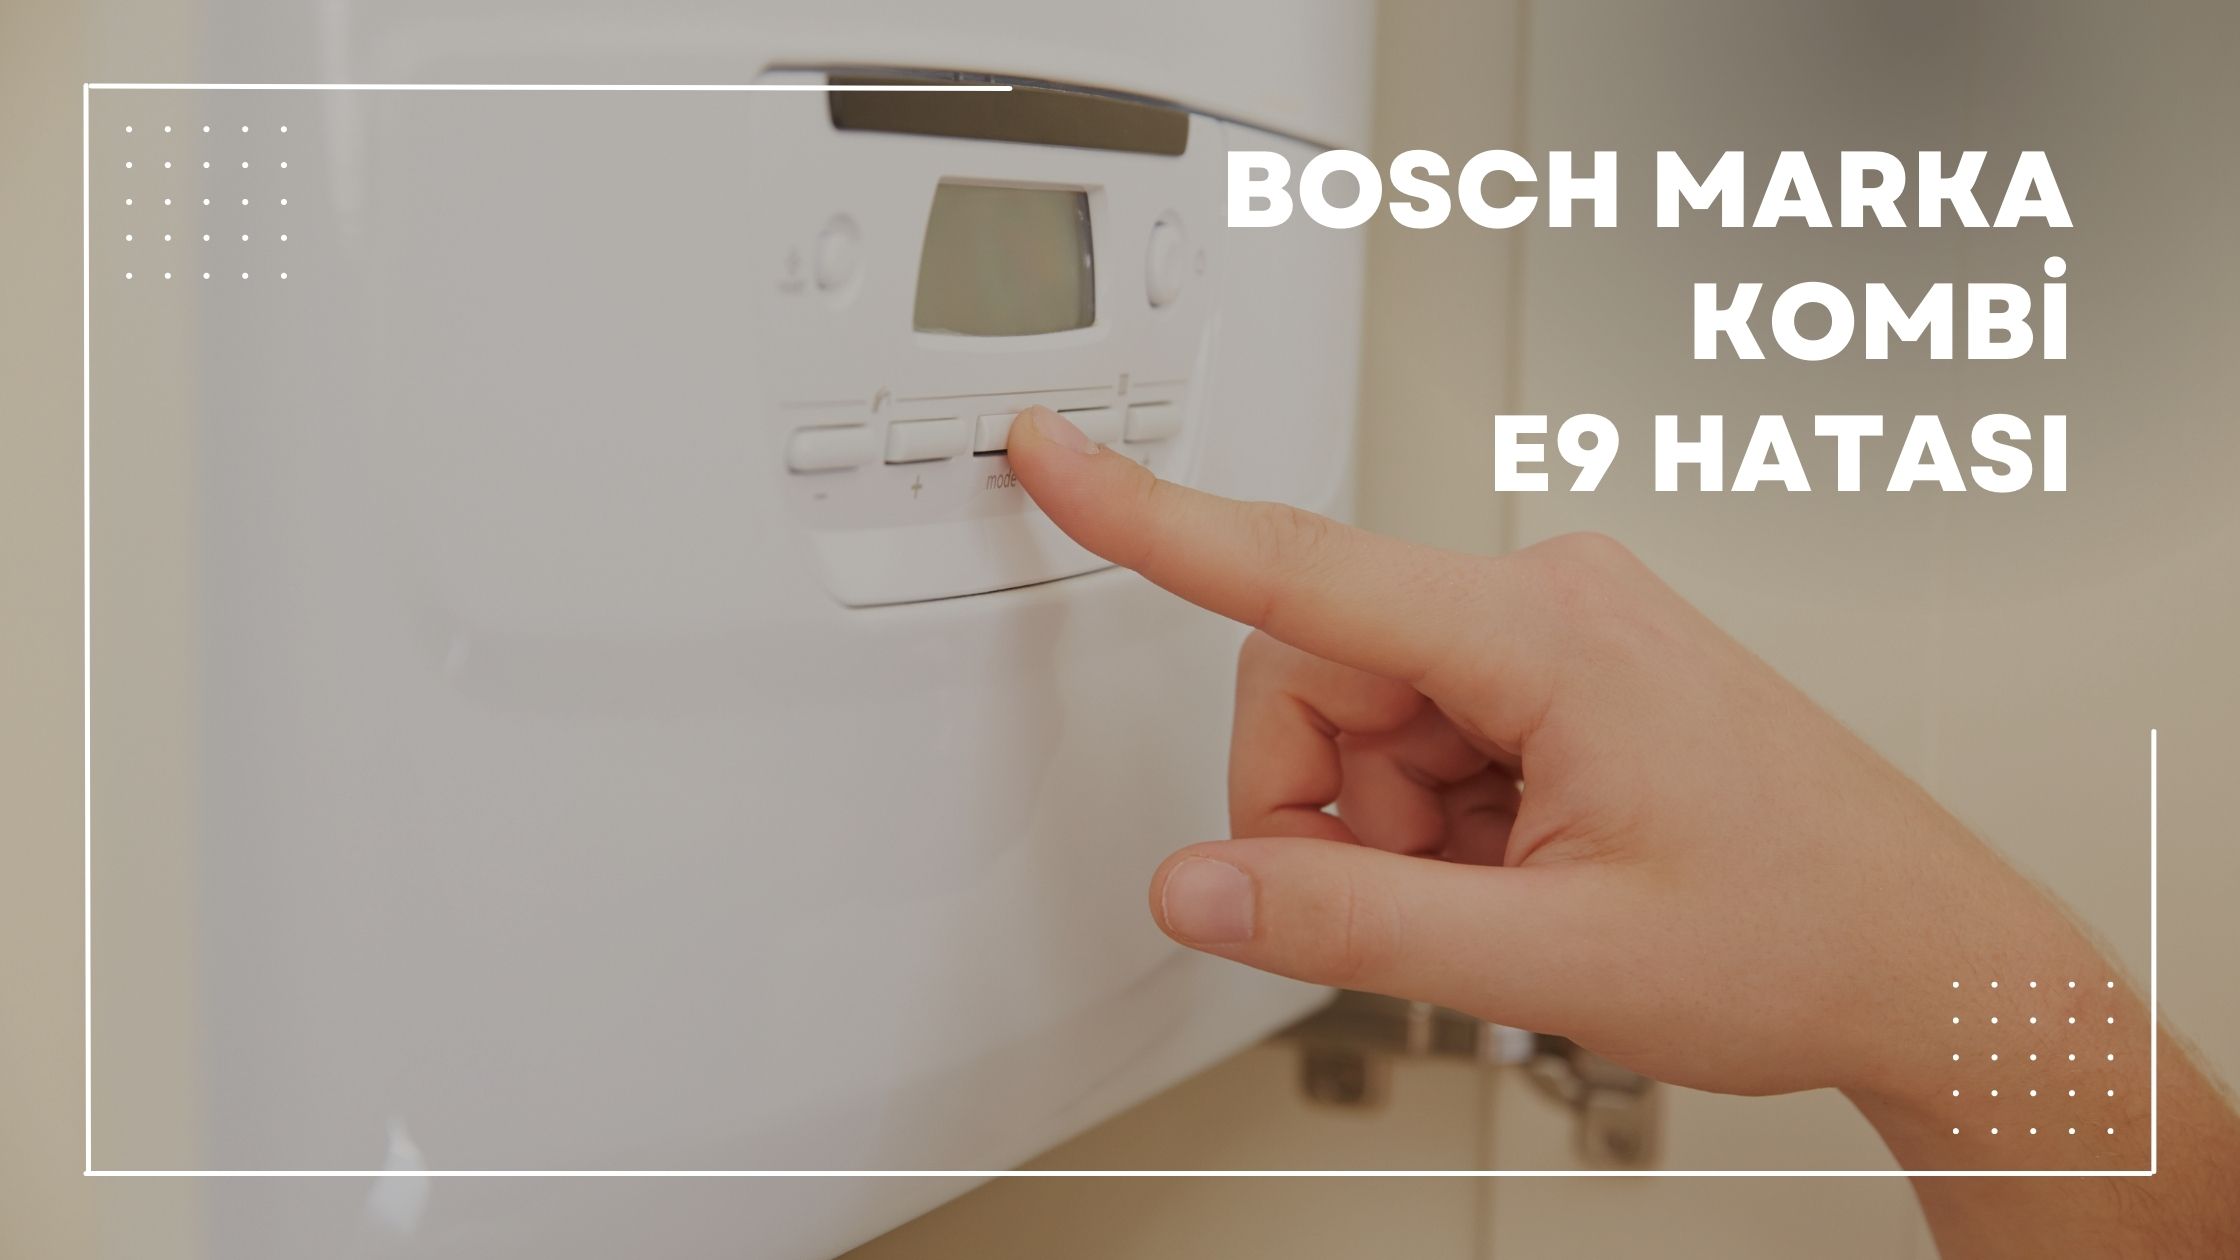 Bosch Marka Kombi E9 Hatası